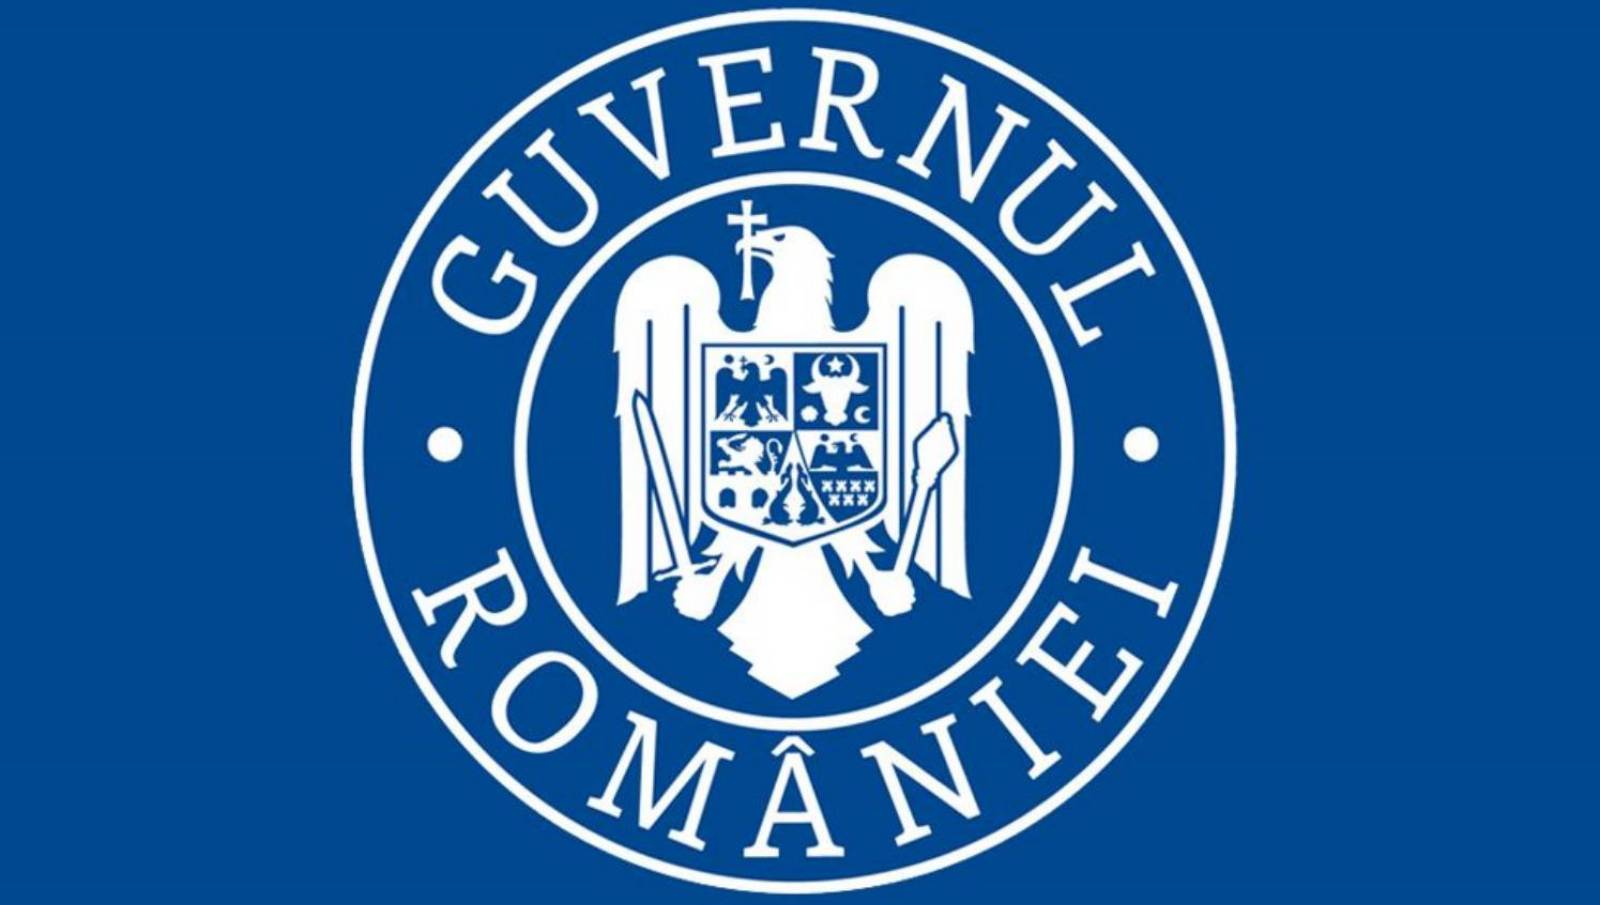 Guvernul Romaniei Reguli redeschiderea restaurantelor